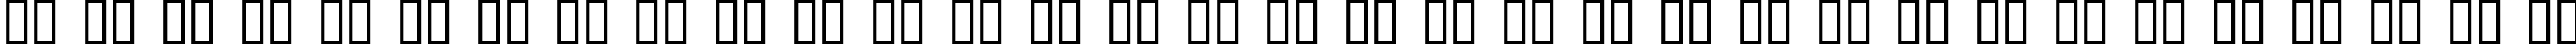 Пример написания русского алфавита шрифтом Watertown